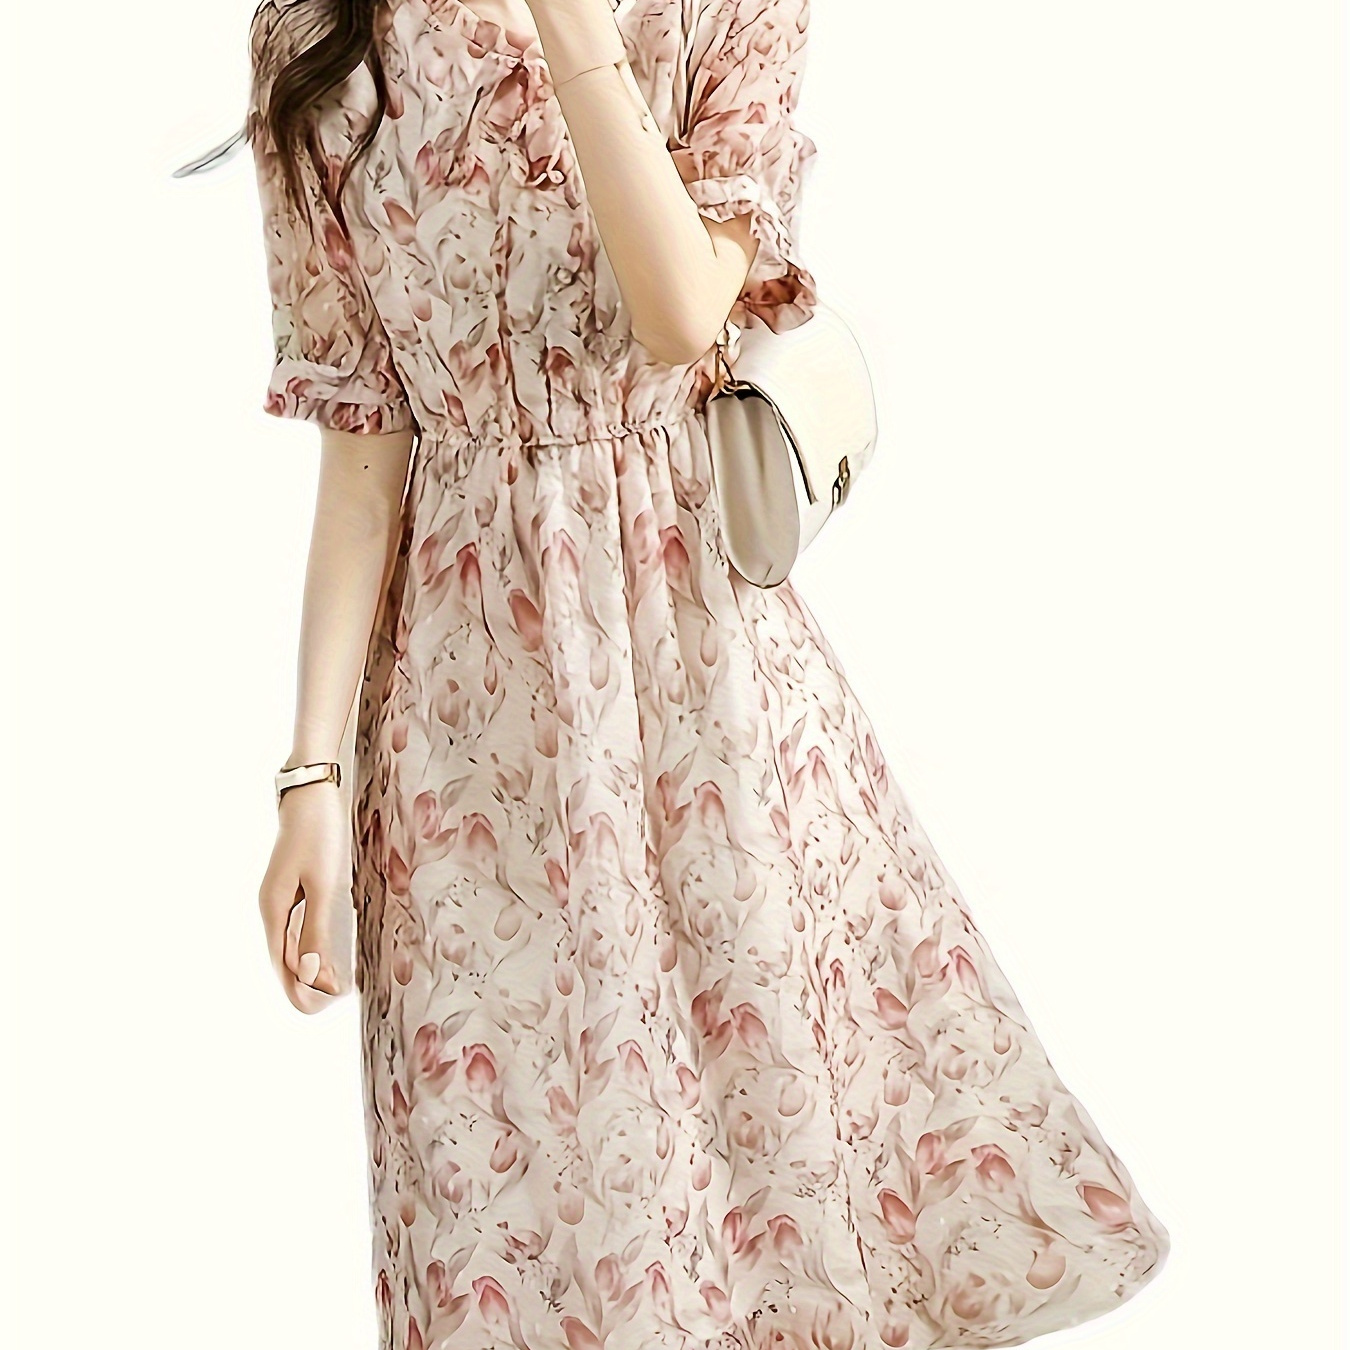 

Floral Print Lettuce Trim Dress, Elegant Short Sleeve Tie Front Peplum Dress For Spring & Summer, Women's Clothing